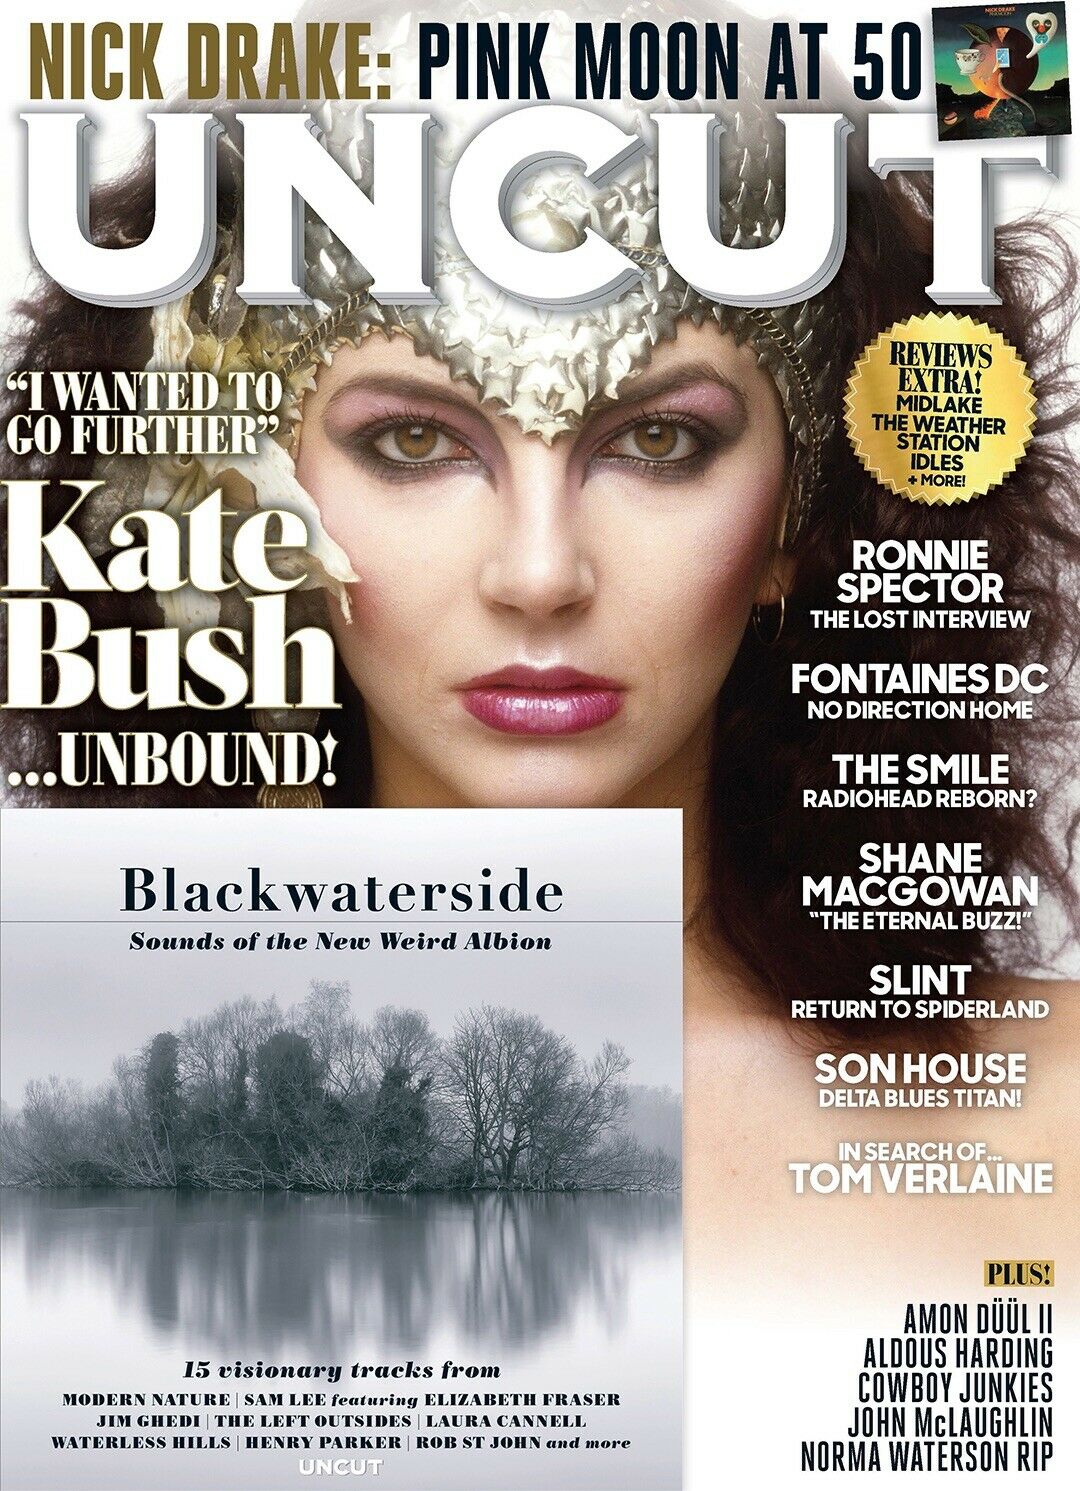 UNCUT magazine April 2022 KATE BUSH cover and feature + CD - Ronnie Spector